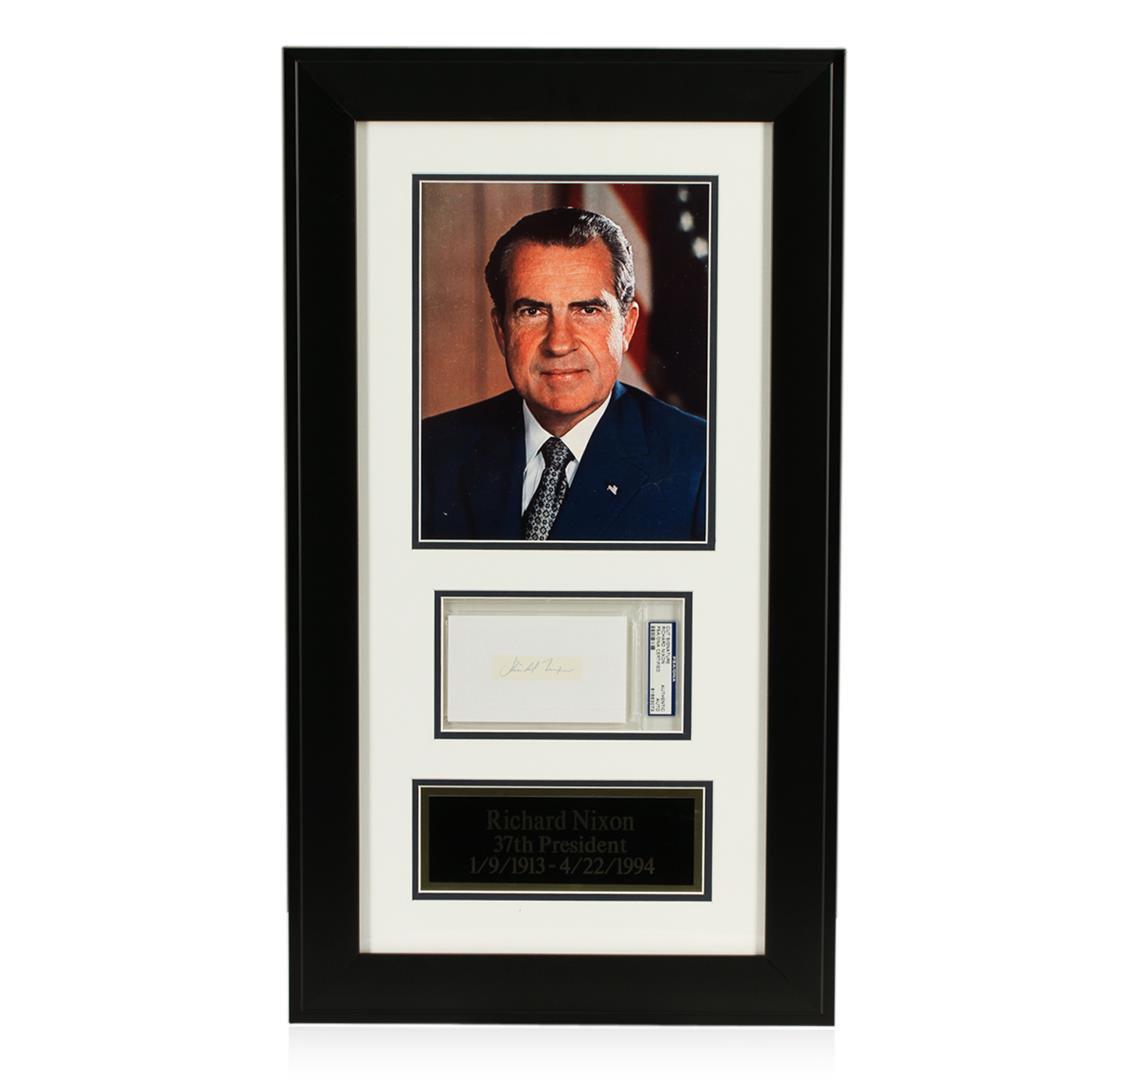 Richard Nixon Signed Cut Display PSA Certified